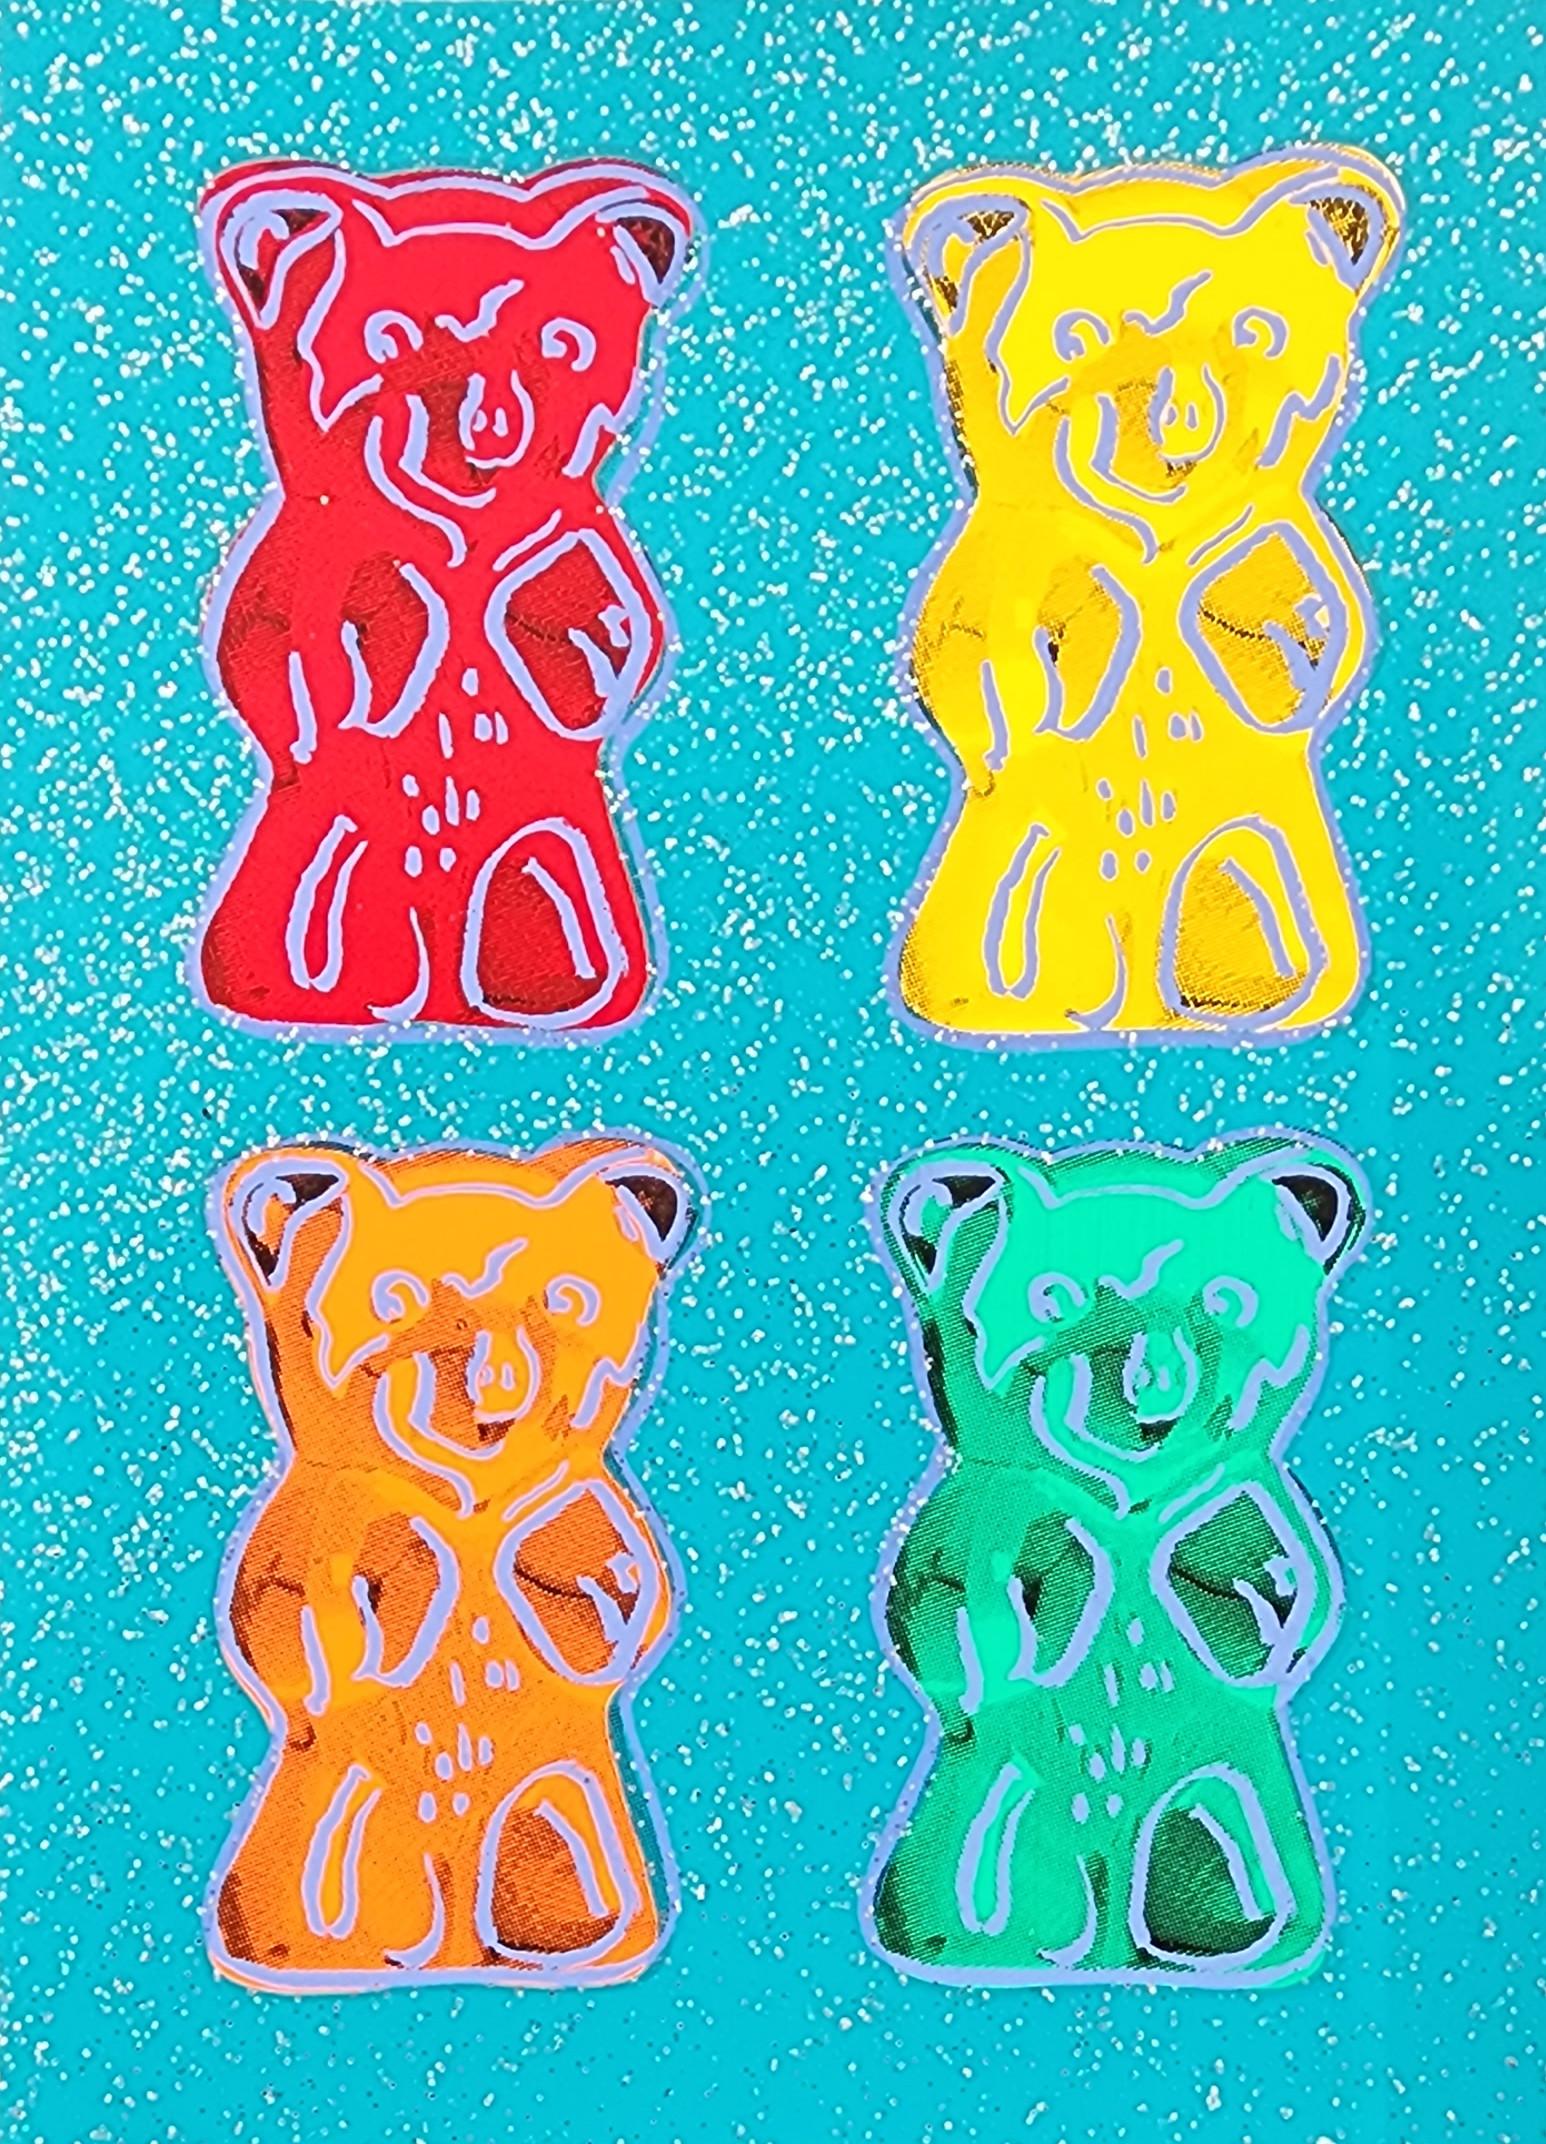 Jurgen Kuhl - Gummi Bears #2 with Glitter Small - TEAL (Pop Art, Andy  Warhol) For Sale at 1stDibs